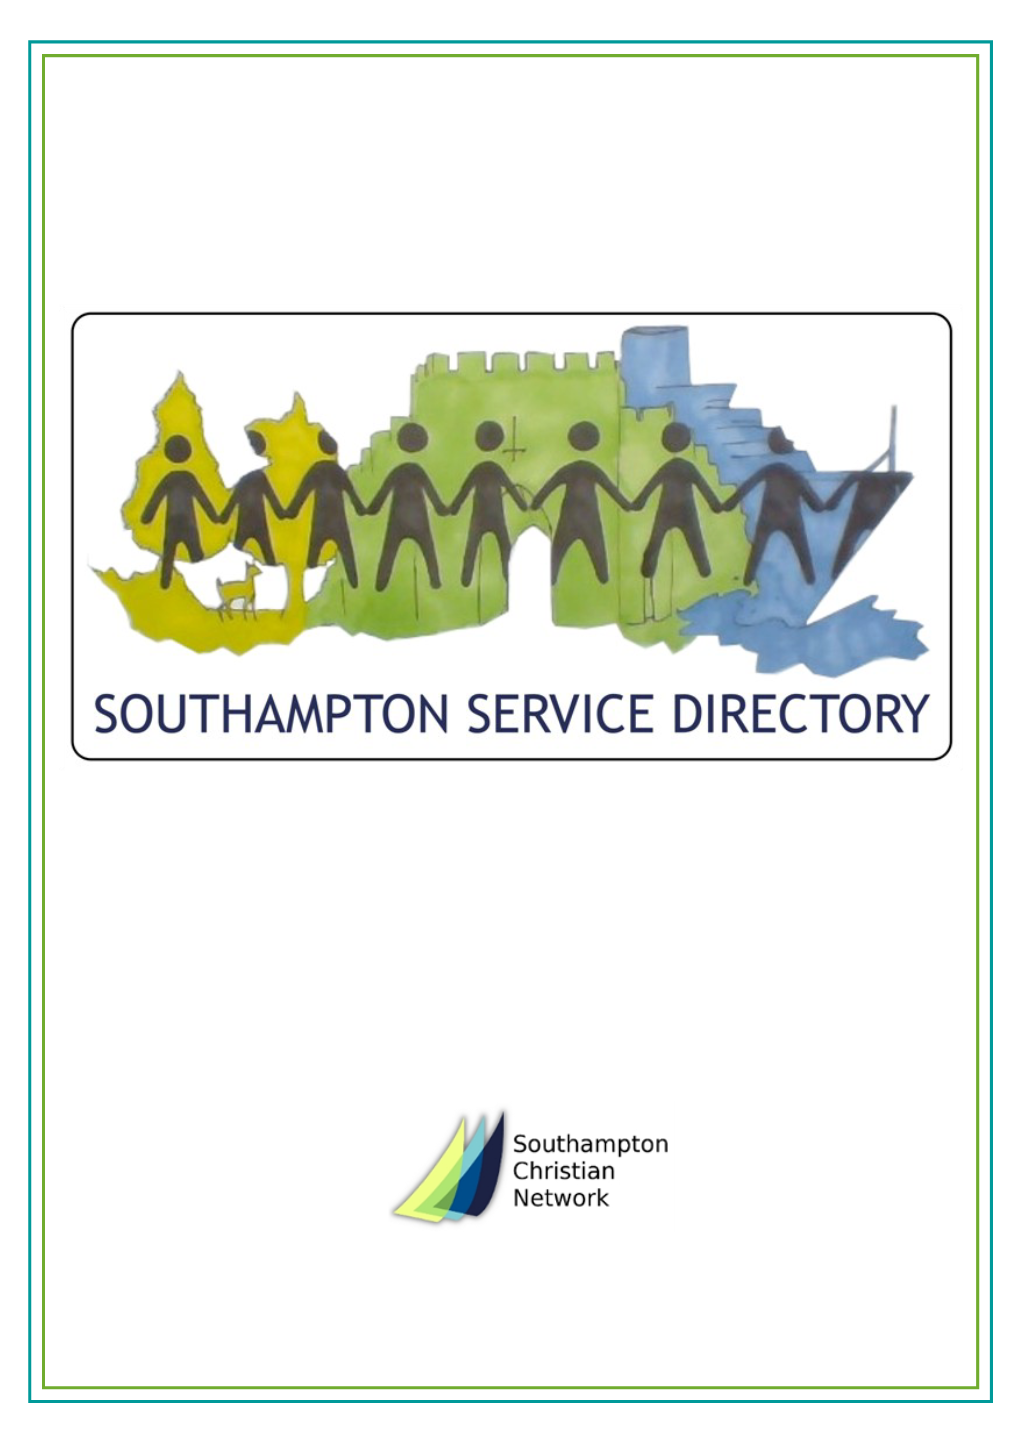 Southampton Service Directory